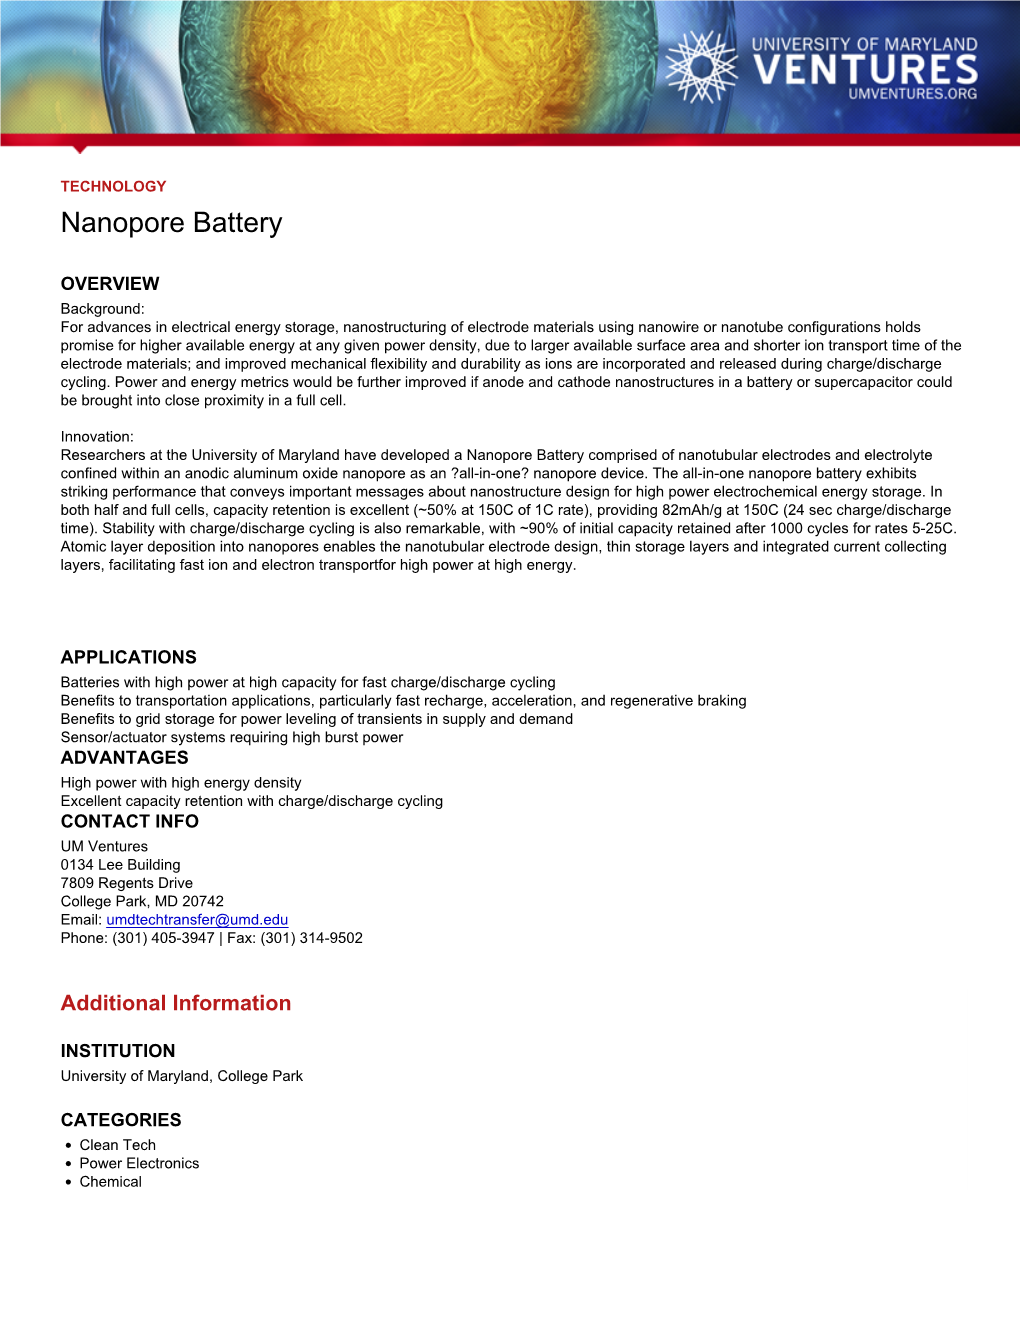 Nanopore Battery